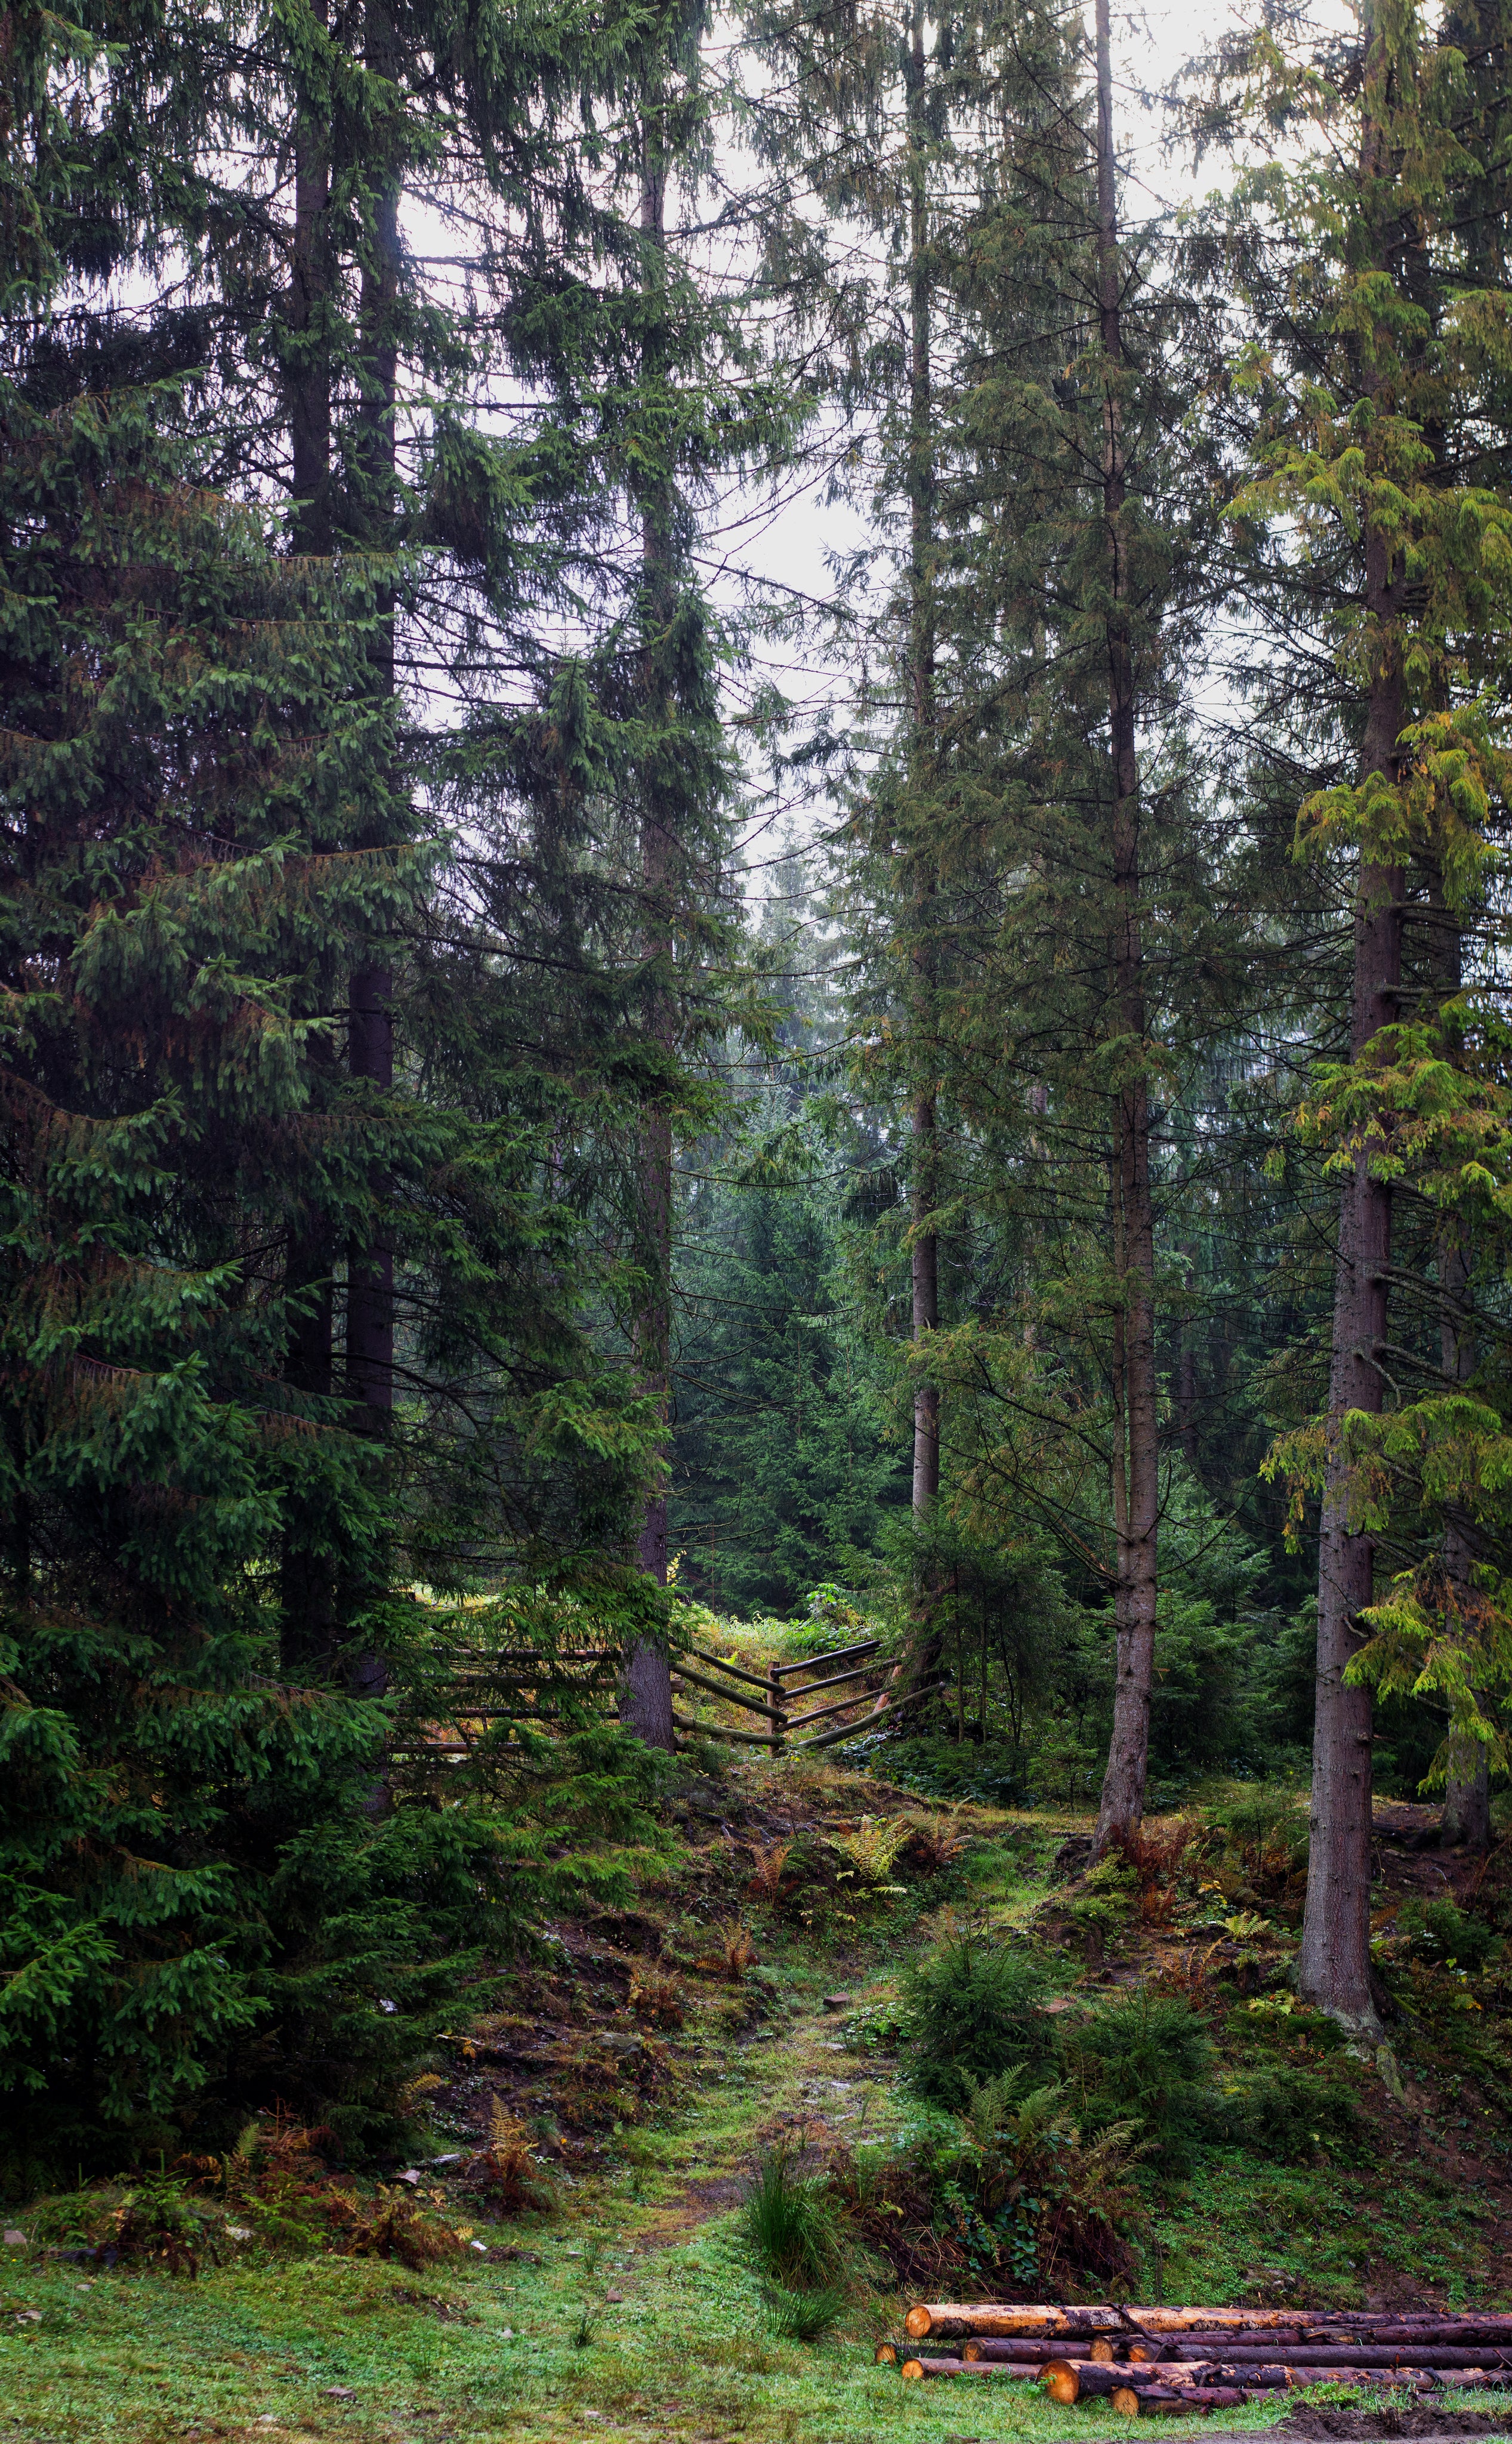 a walkway runs through a forest